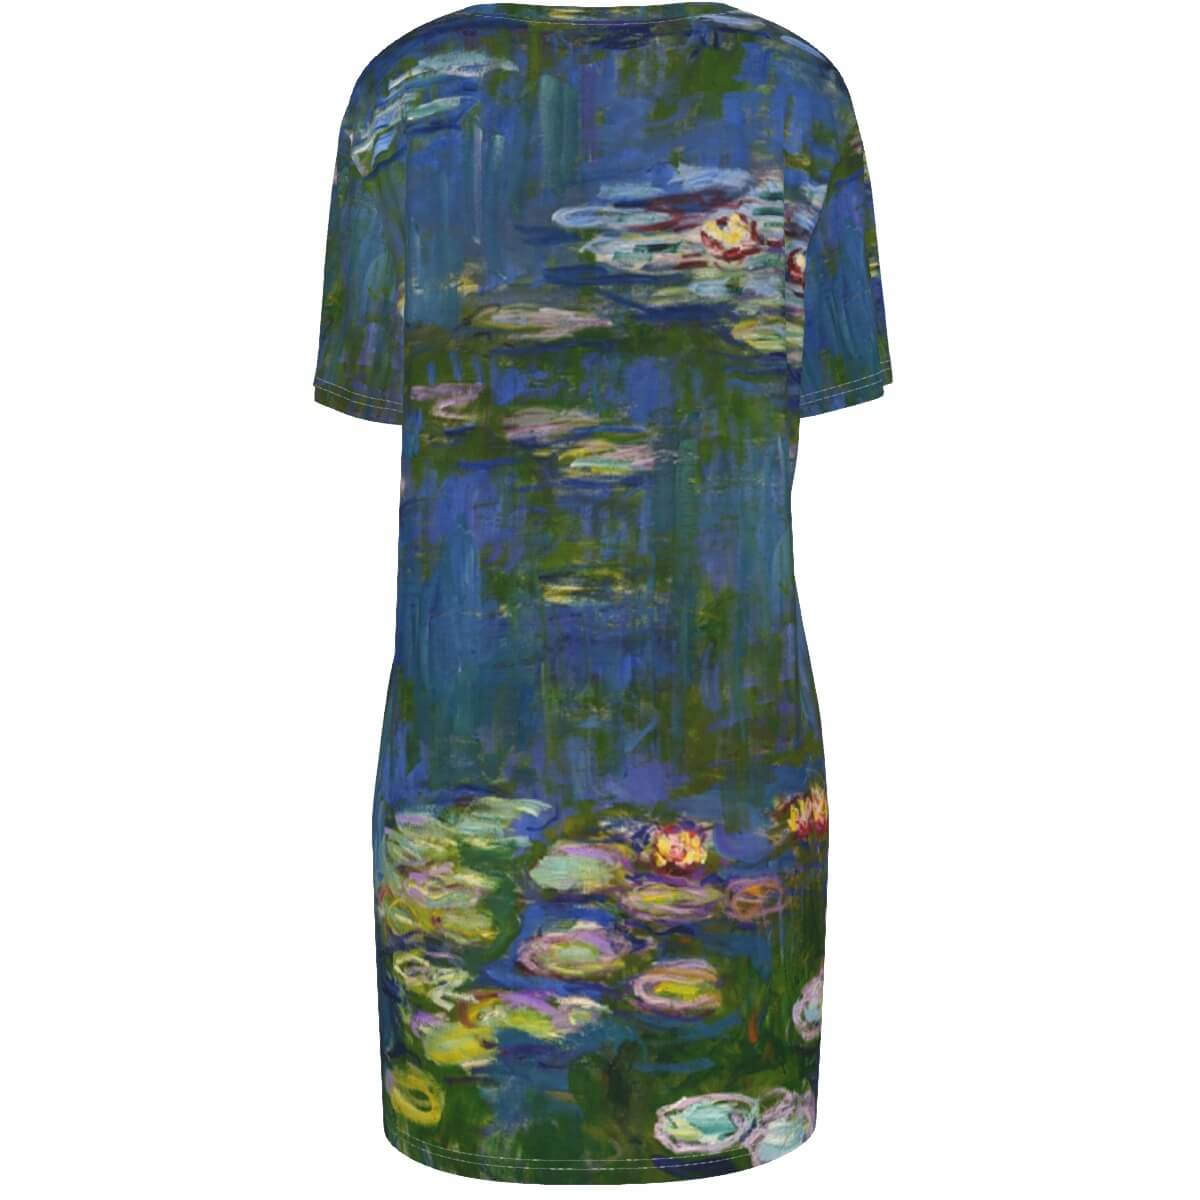 Claude Monet Inspired Fashion